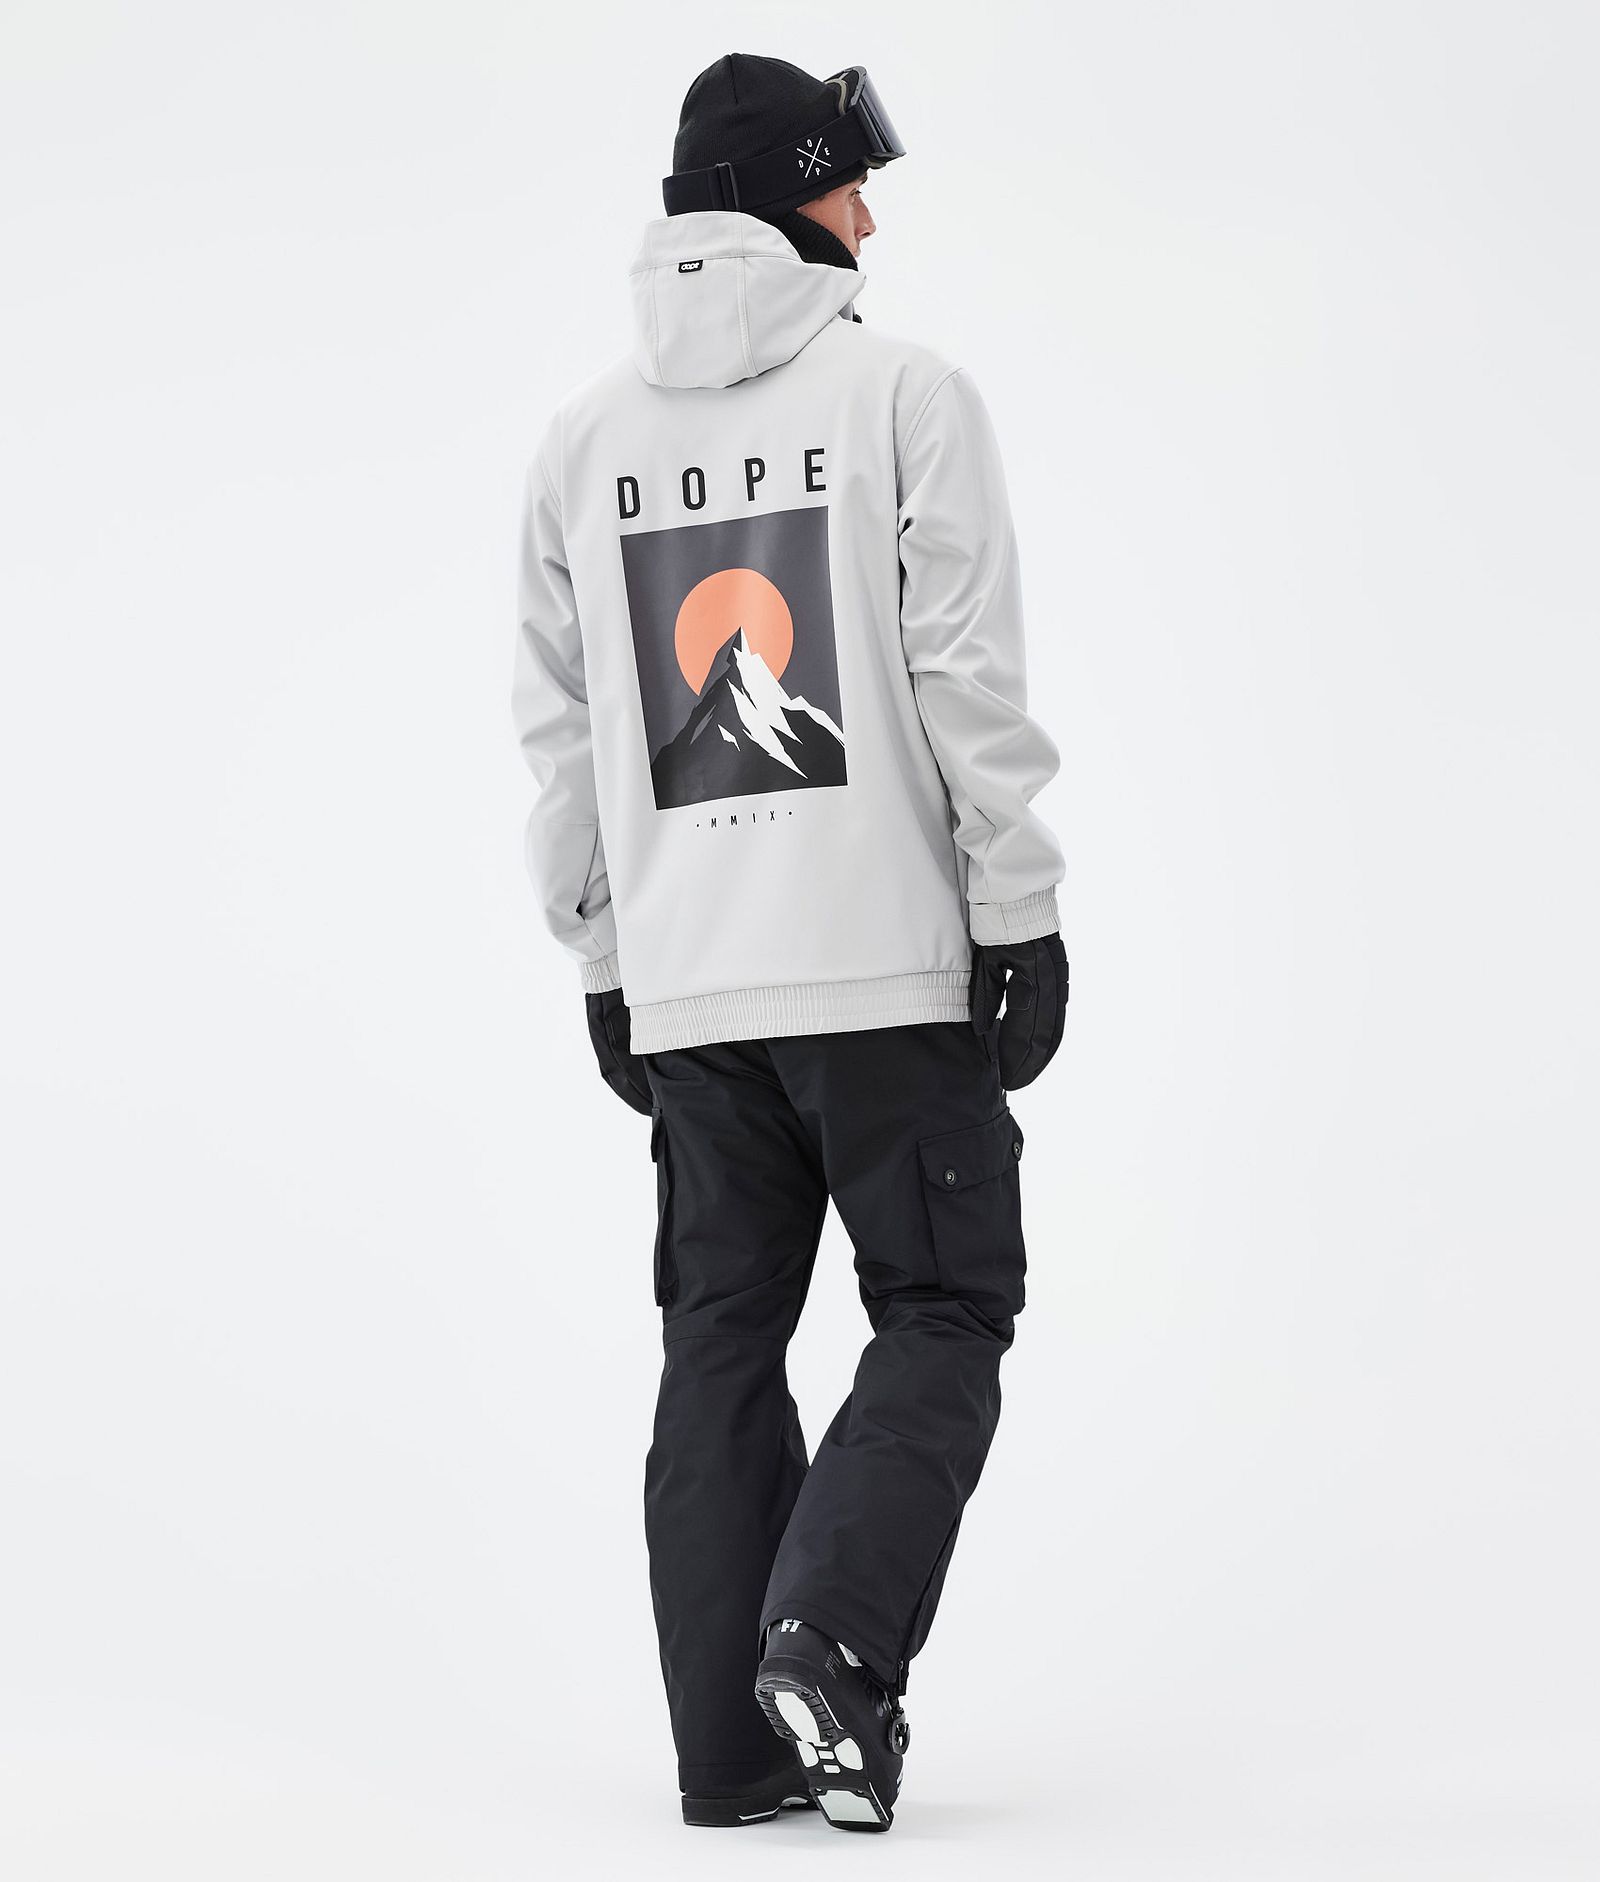 Dope Yeti Outfit Ski Homme Light Grey/Blackout